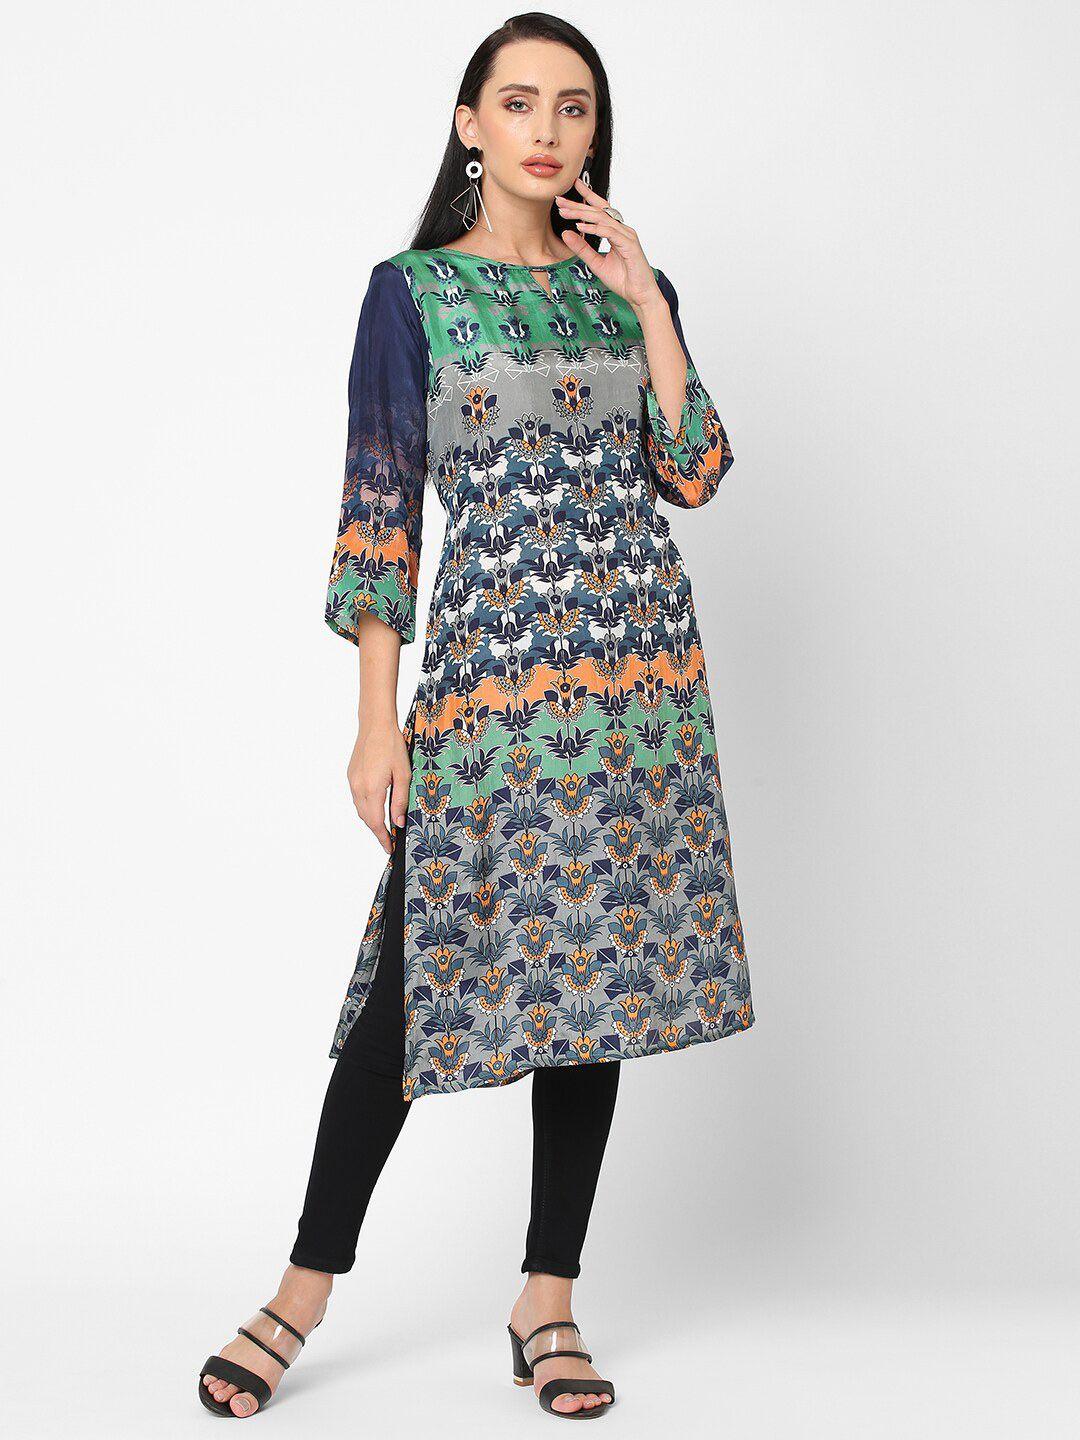 cloth haus india women green & blue ethnic motifs printed kurta